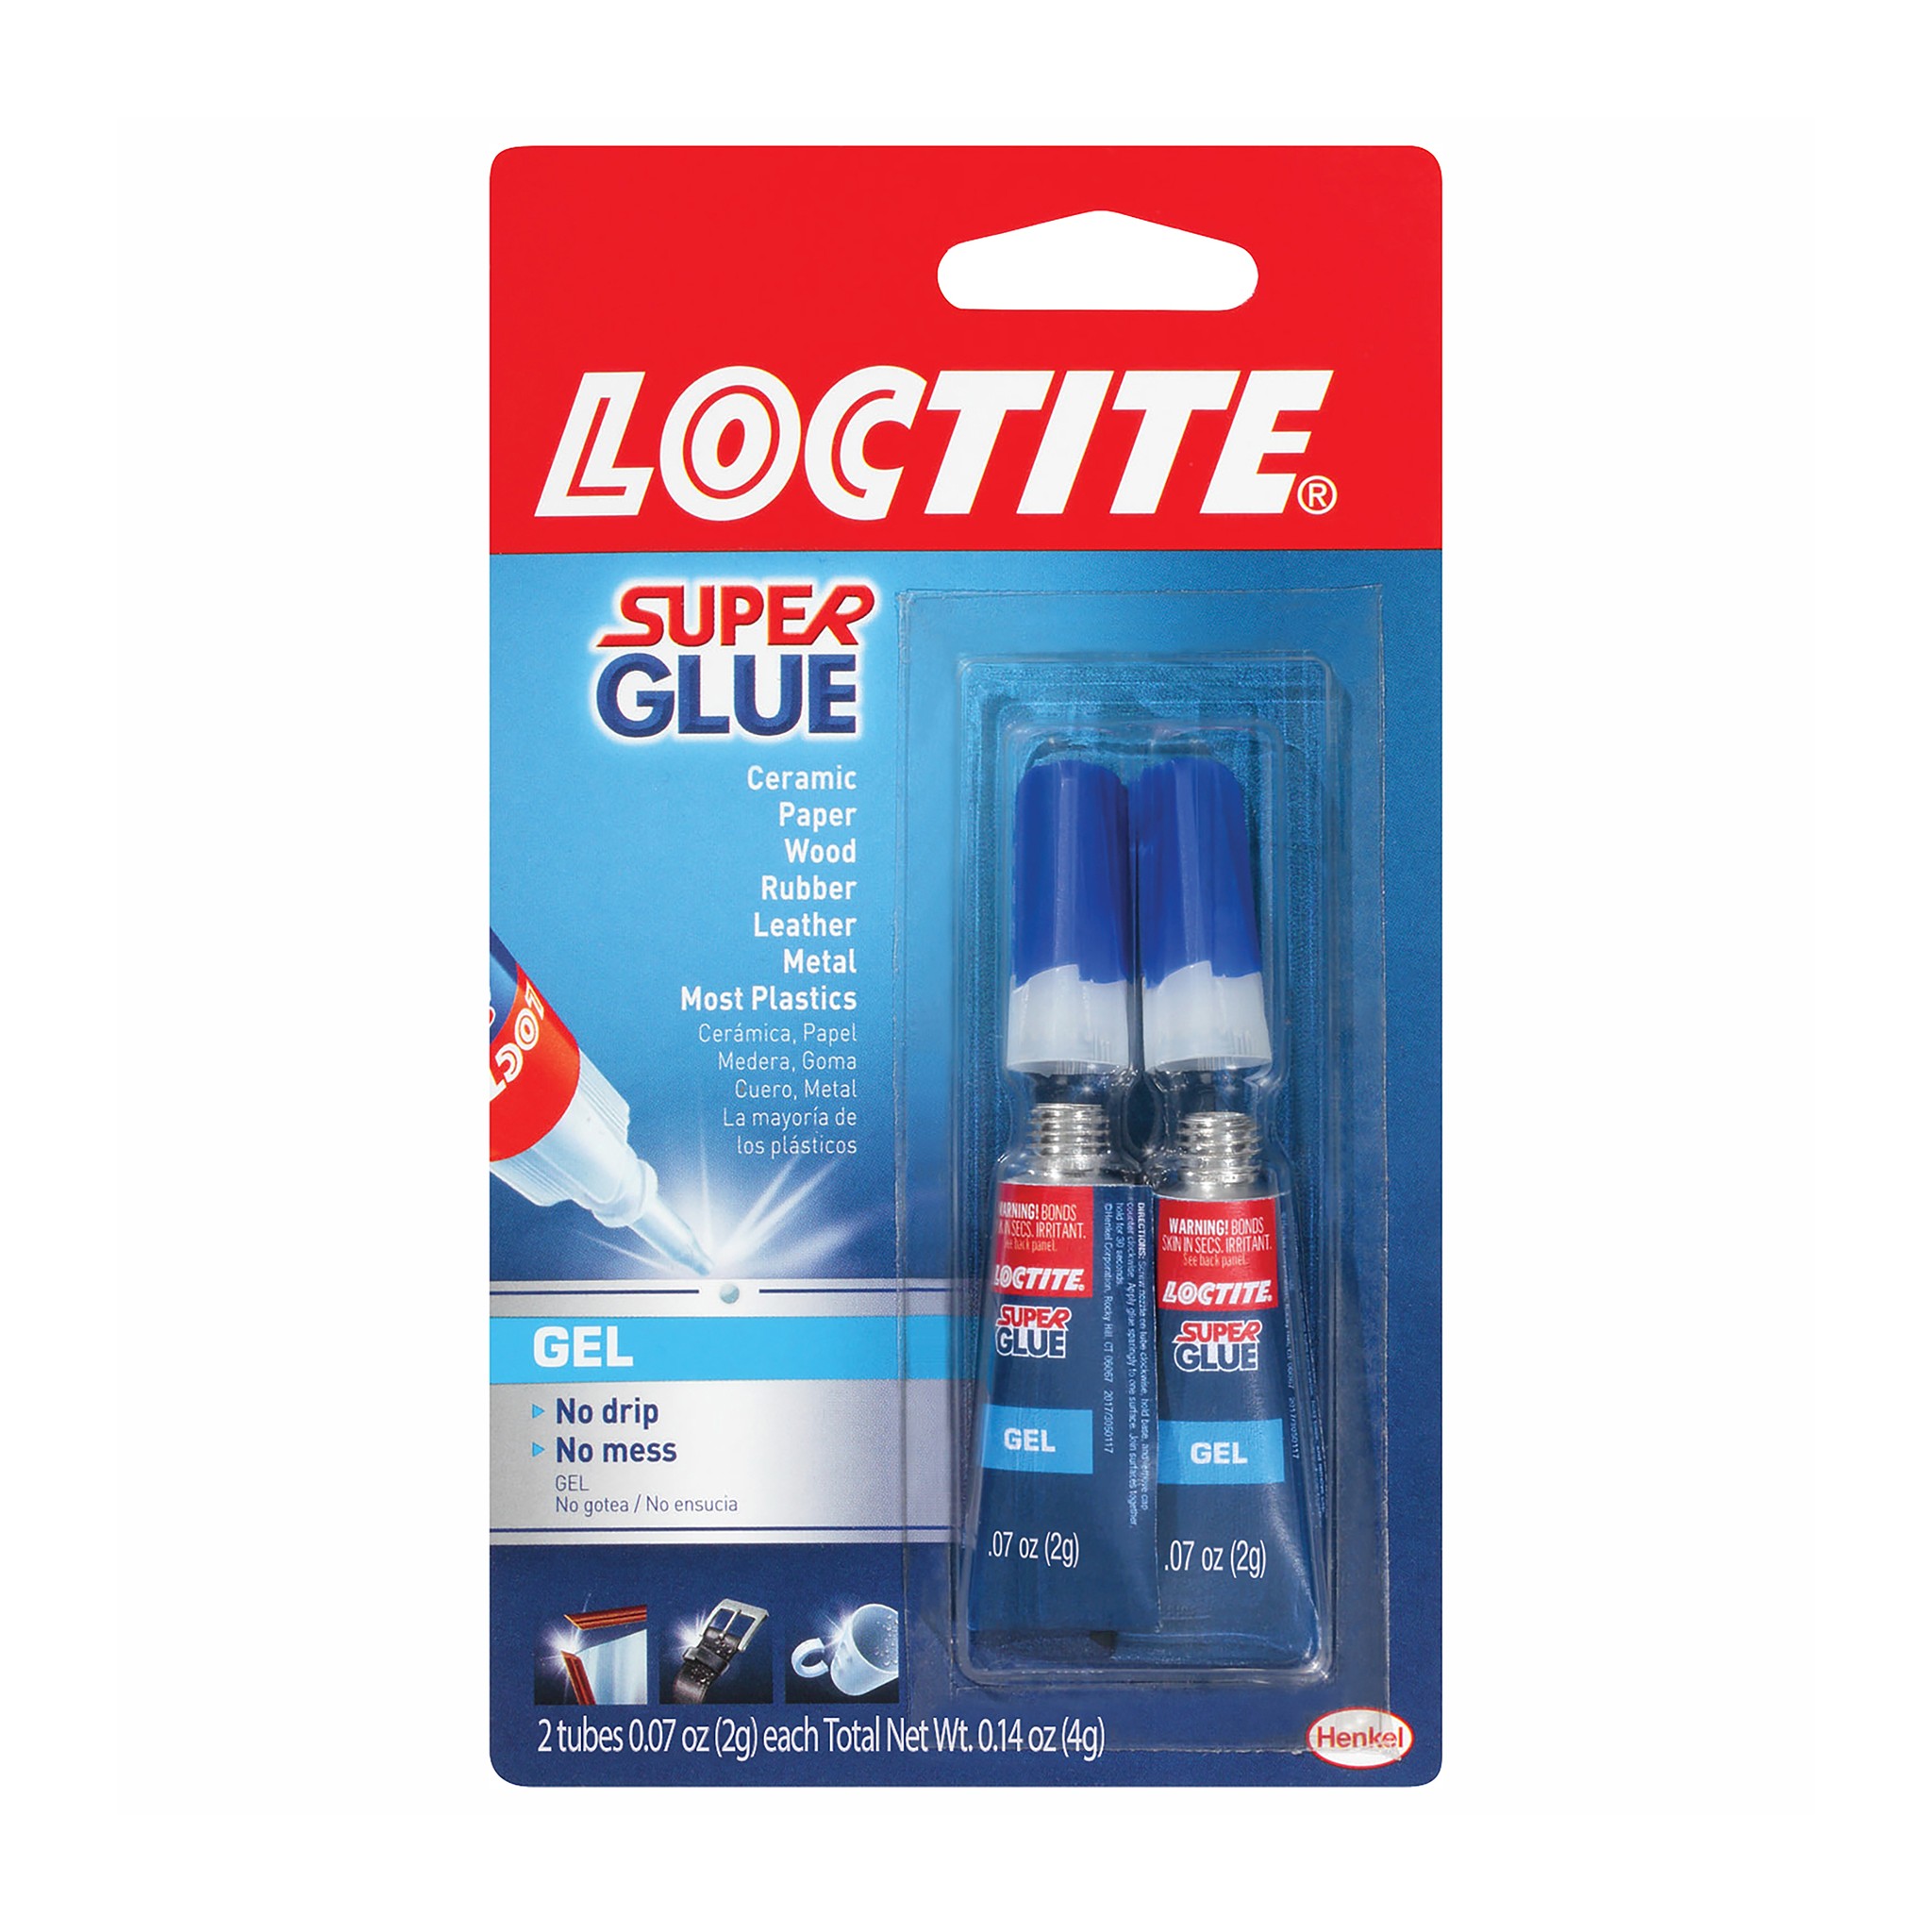 LOCTITE Super Glue, GLASS / METAL Bond Instant Adhesive 3g. Water